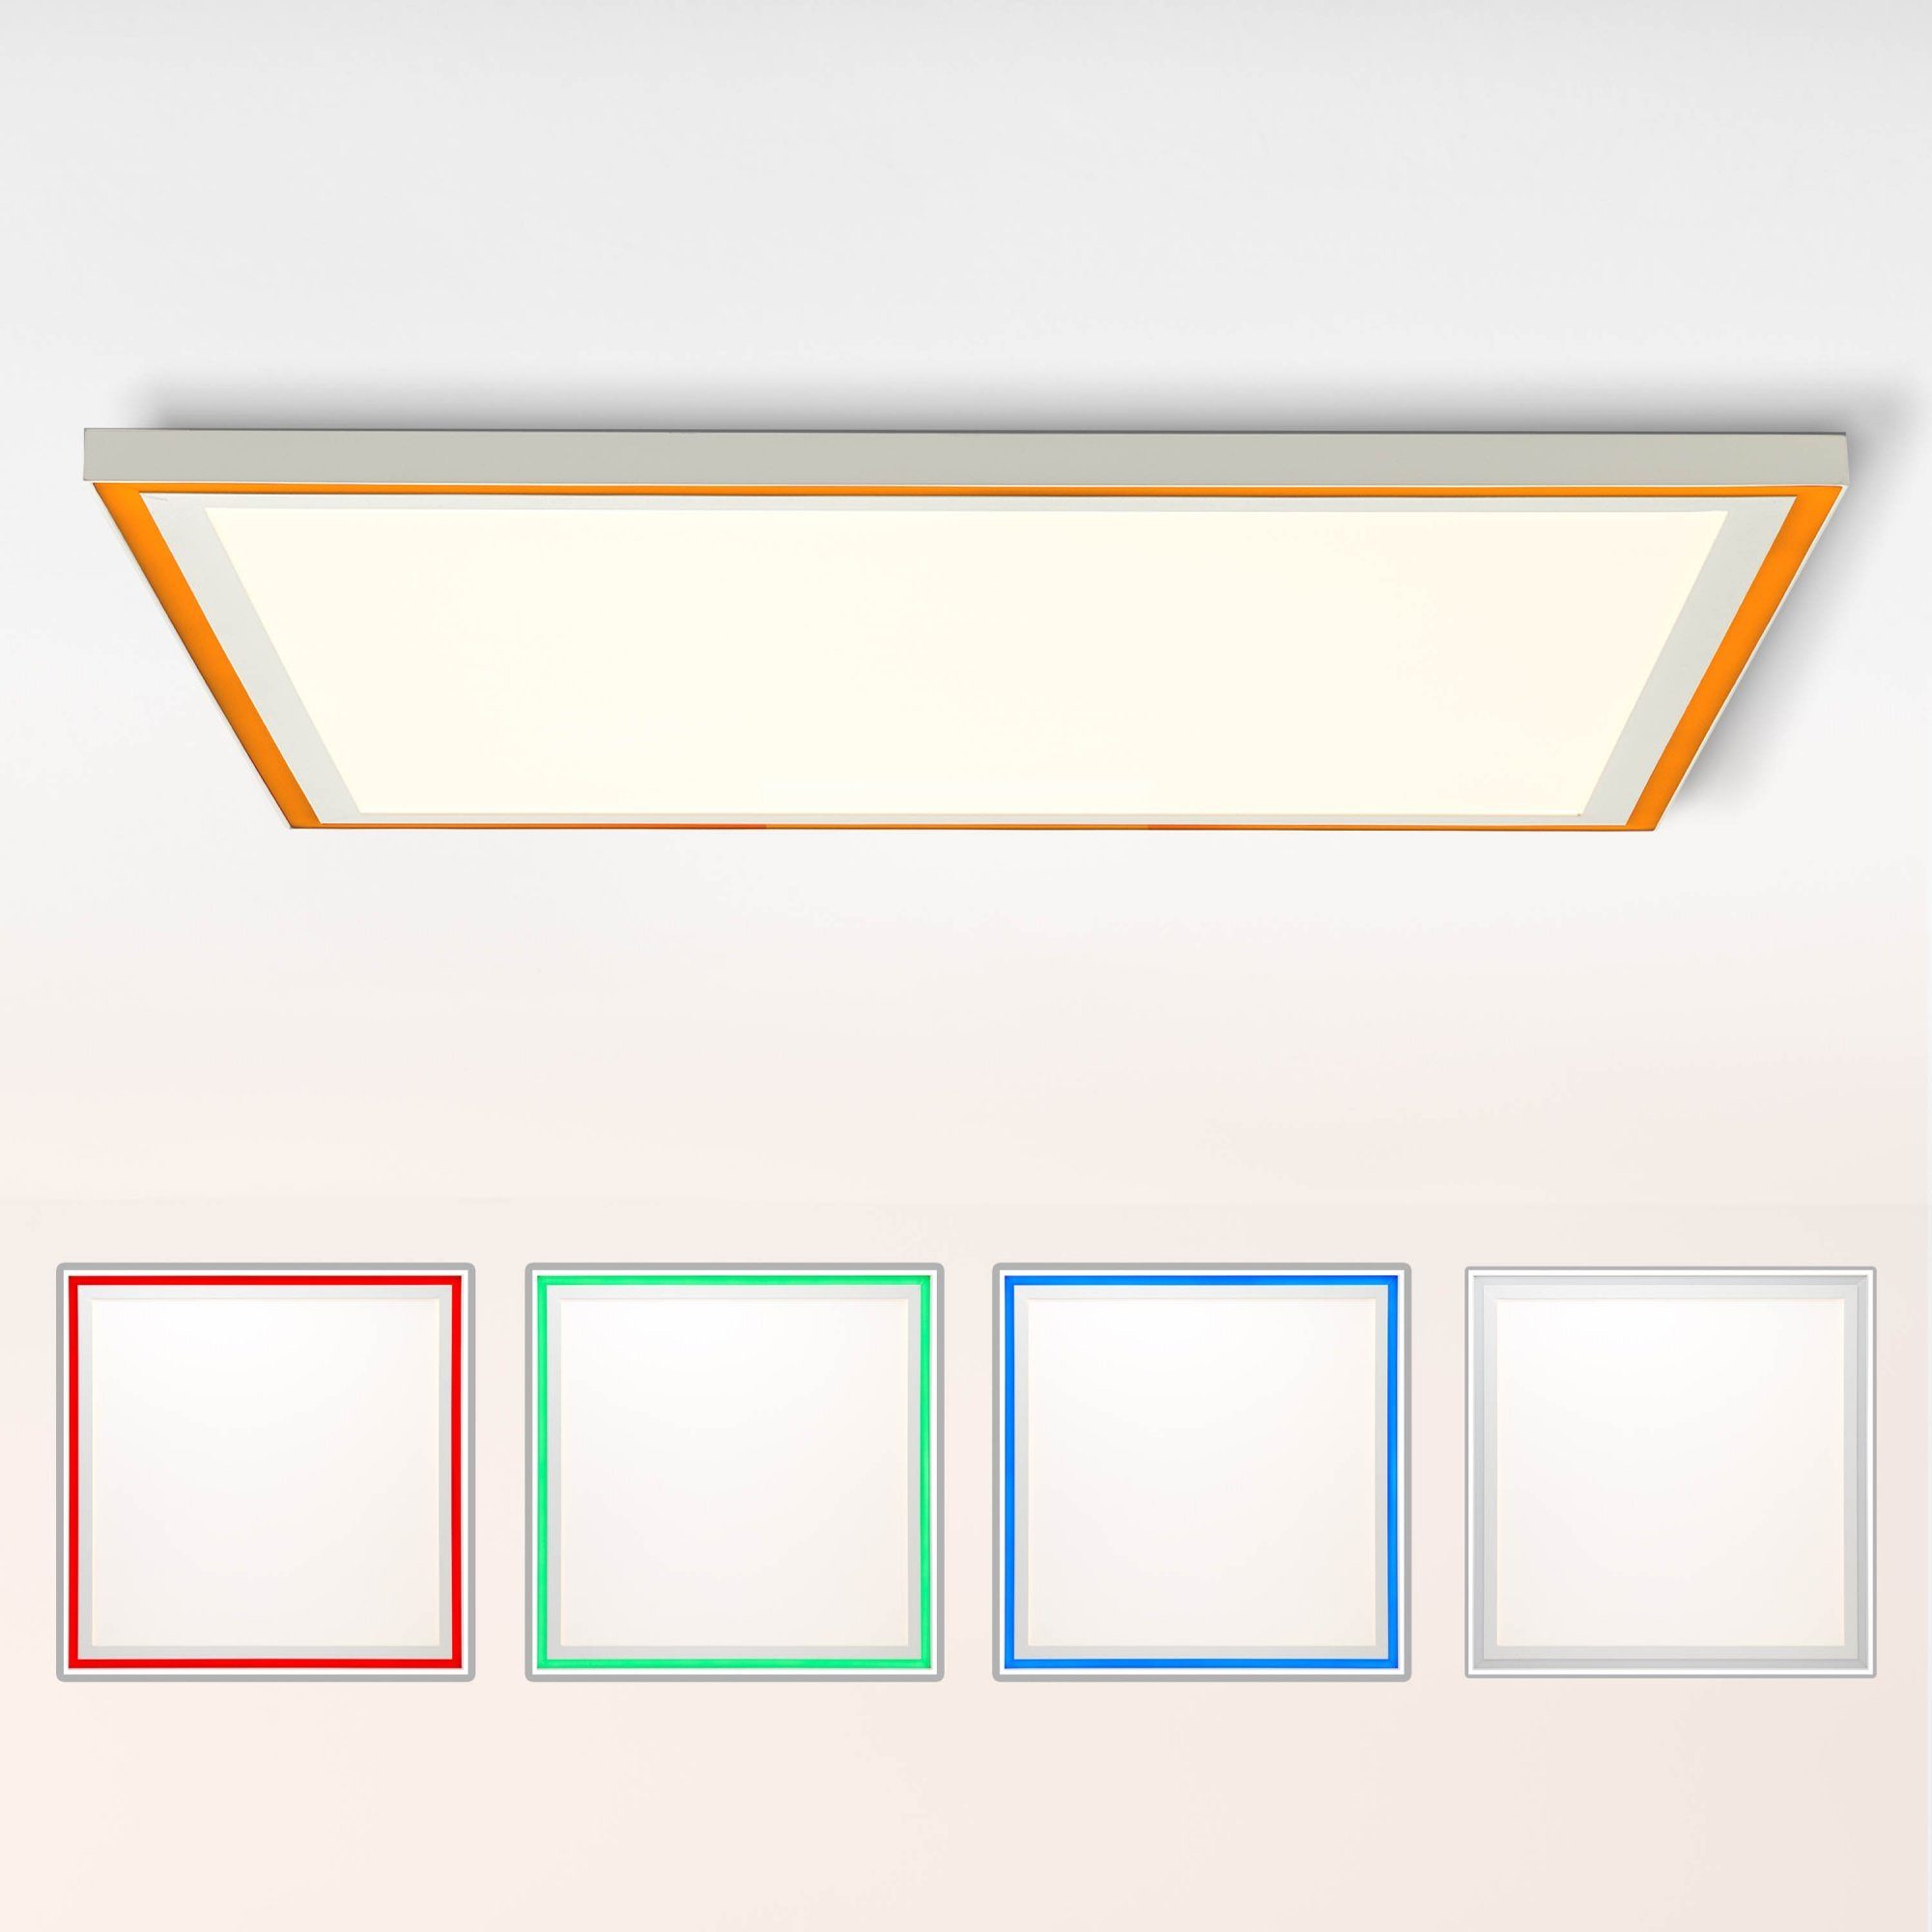 Lightbox LED Panel, CCT - über Fernbedienung, LED fest integriert, warmweiß  - kaltweiß, RGB, dimmbar, 3800 Lumen, Memory Funktion, 60x60 cm,  Metall/Kunststoff, RGB-Frame Light für farbenfrohe Akzentbeleuchtung